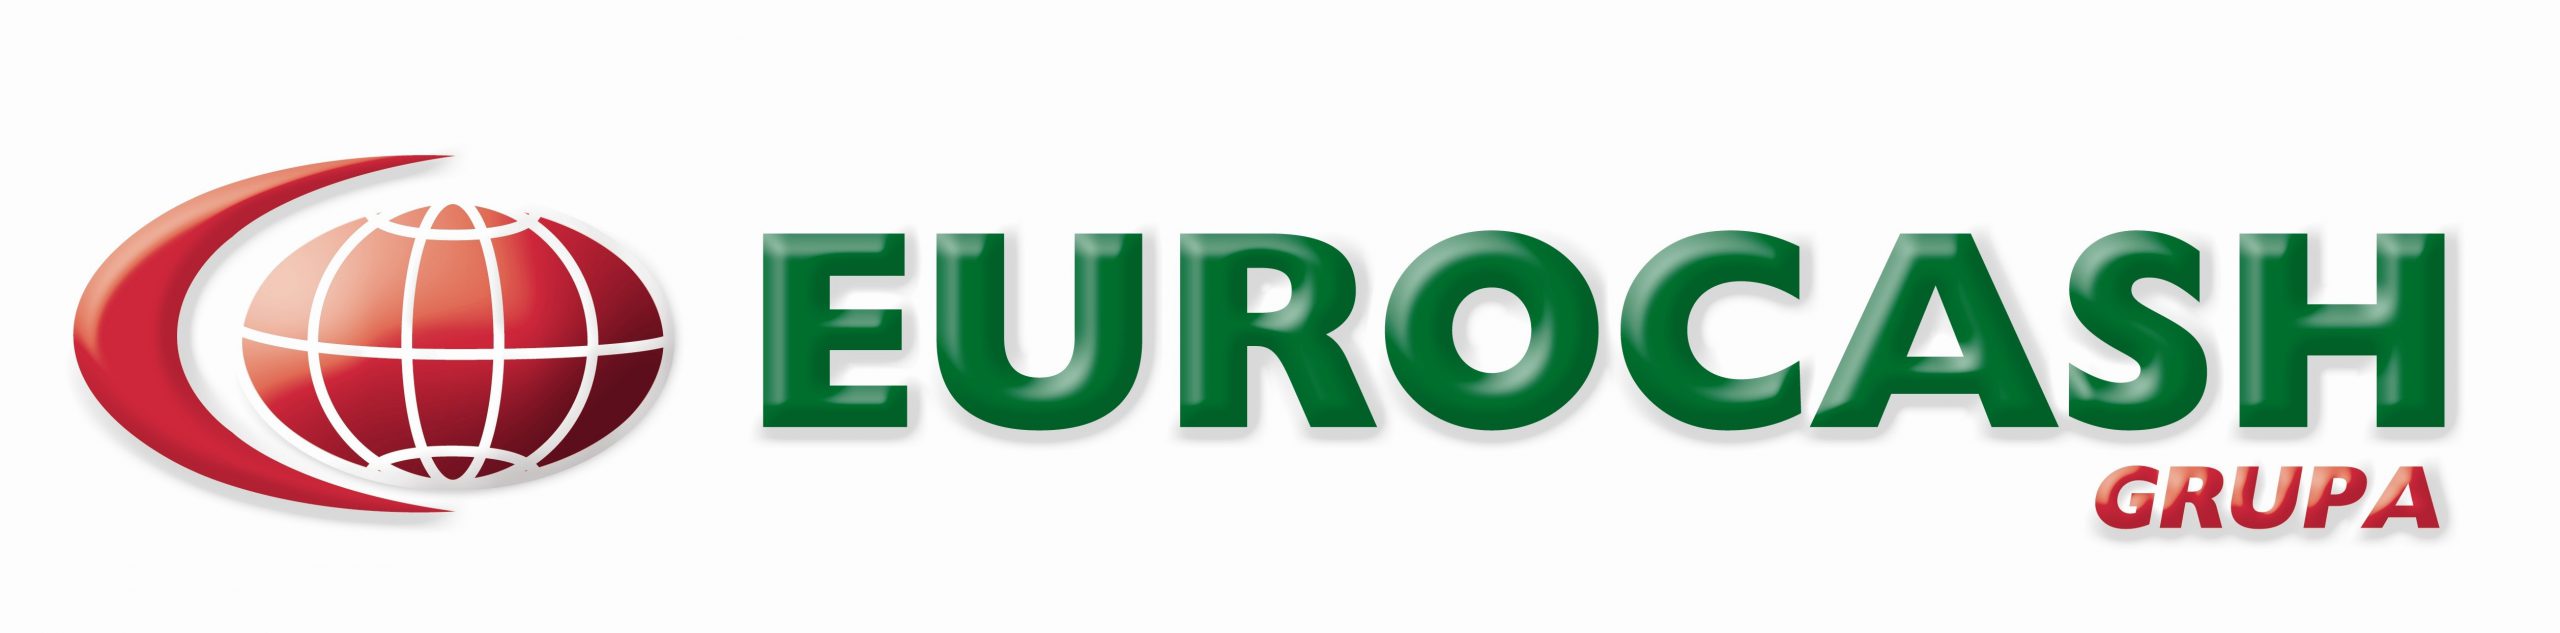 Grupa Eurocash podsumowuje ostatni kwartał 2016 r.